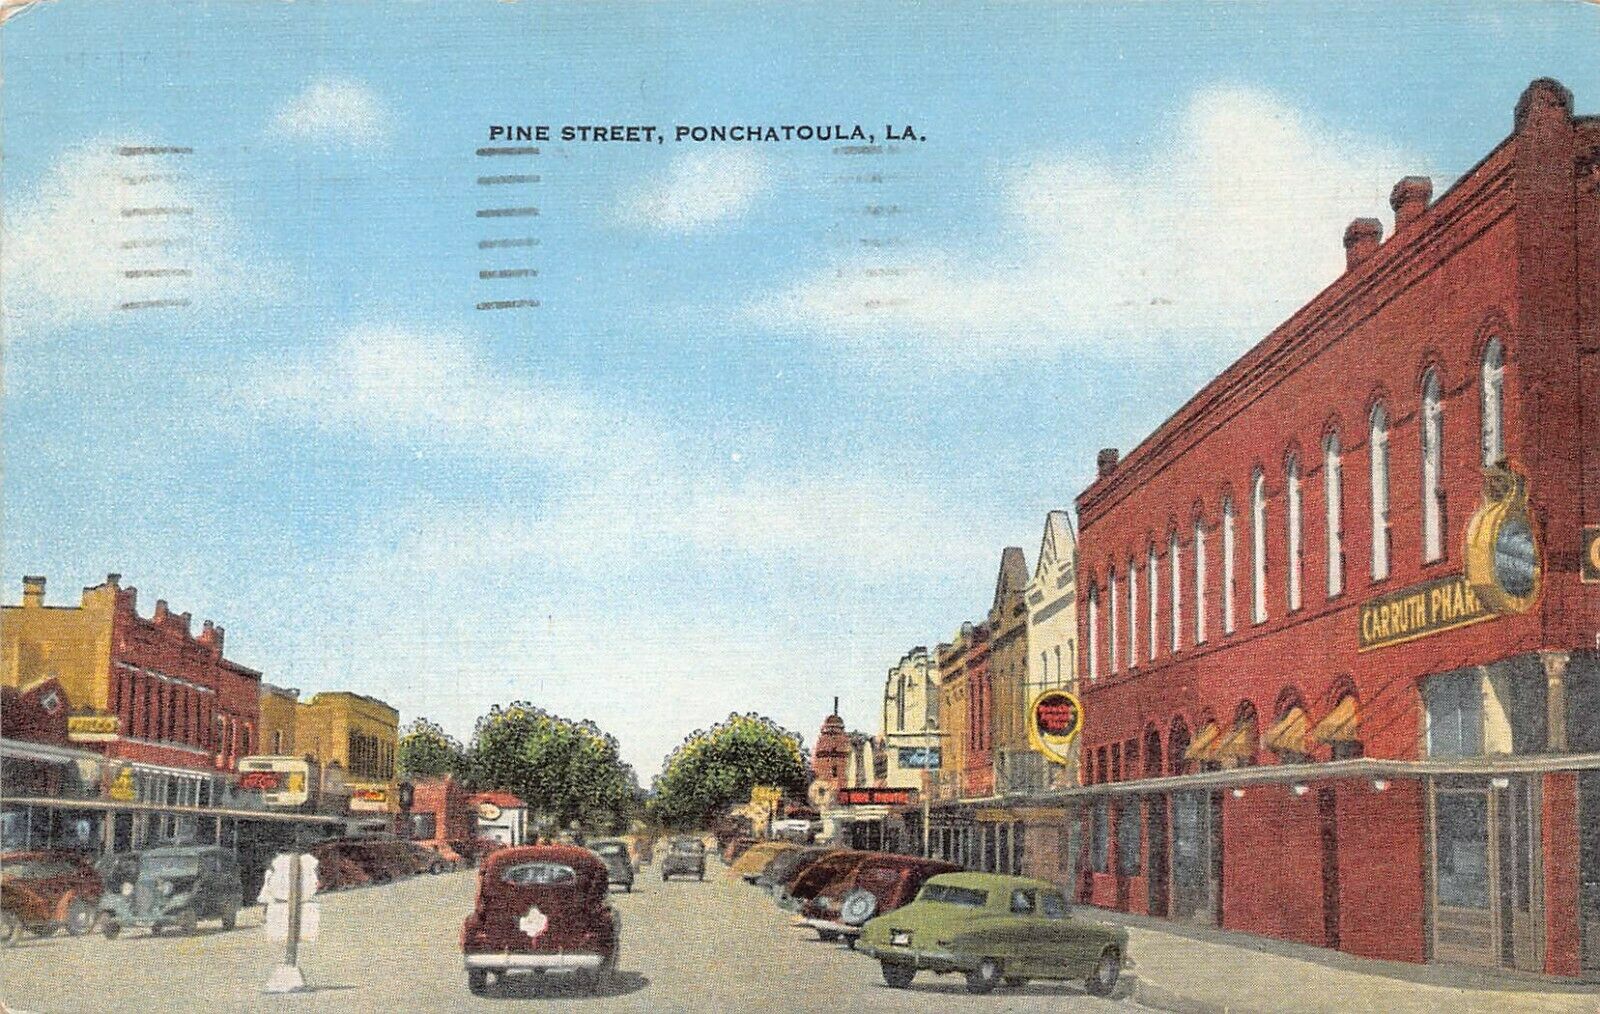 Pine Street Ponchatoula Louisiana Street View Vintage Cars 1950s Postcard M05